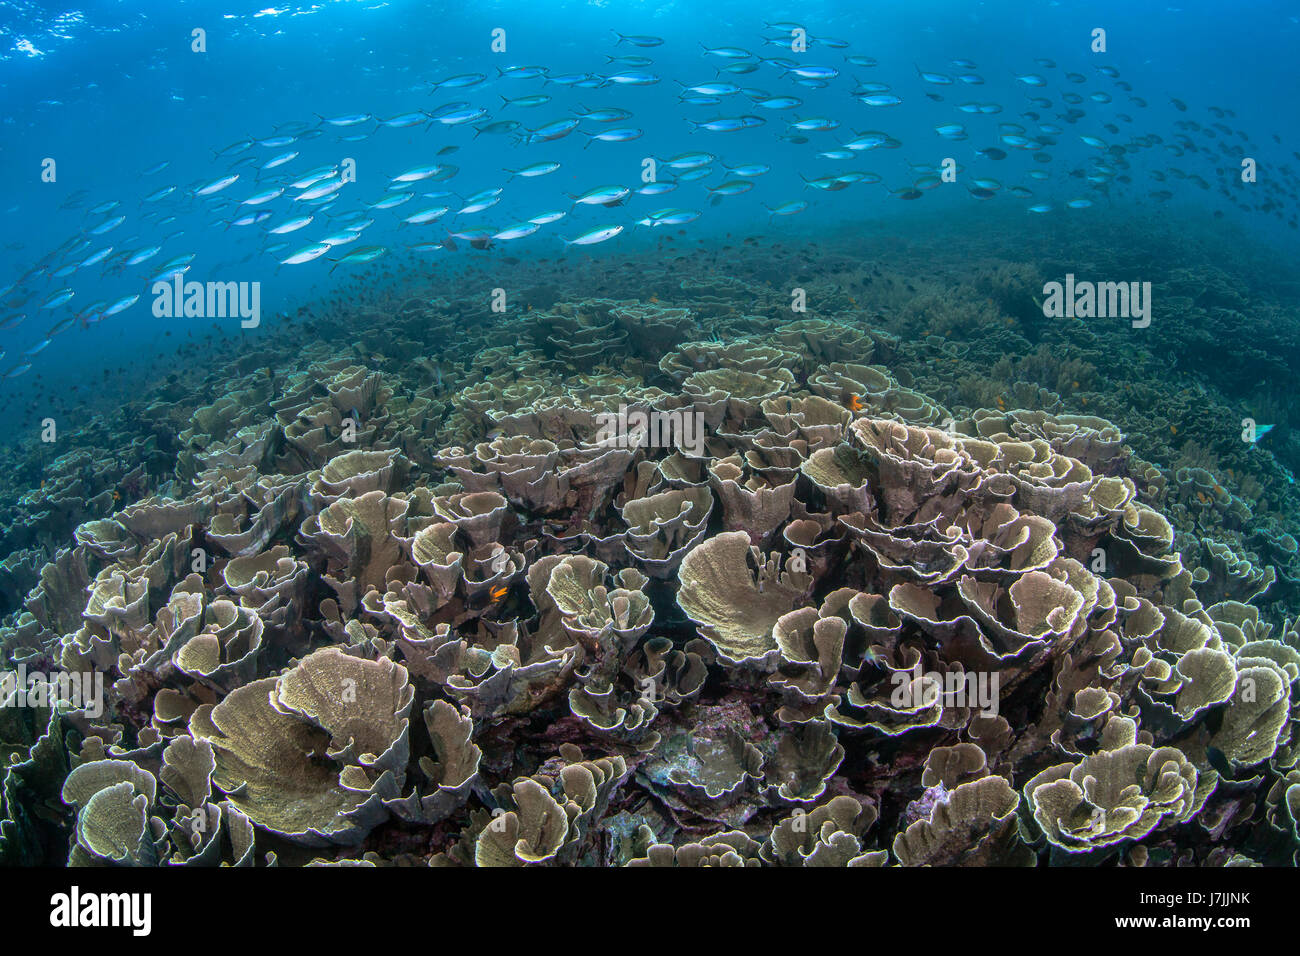 School of fusilier fish stream over cabbage coral (Turbinaria sp.) reef. Raja Ampat, West Papua. Indonesia. Stock Photo